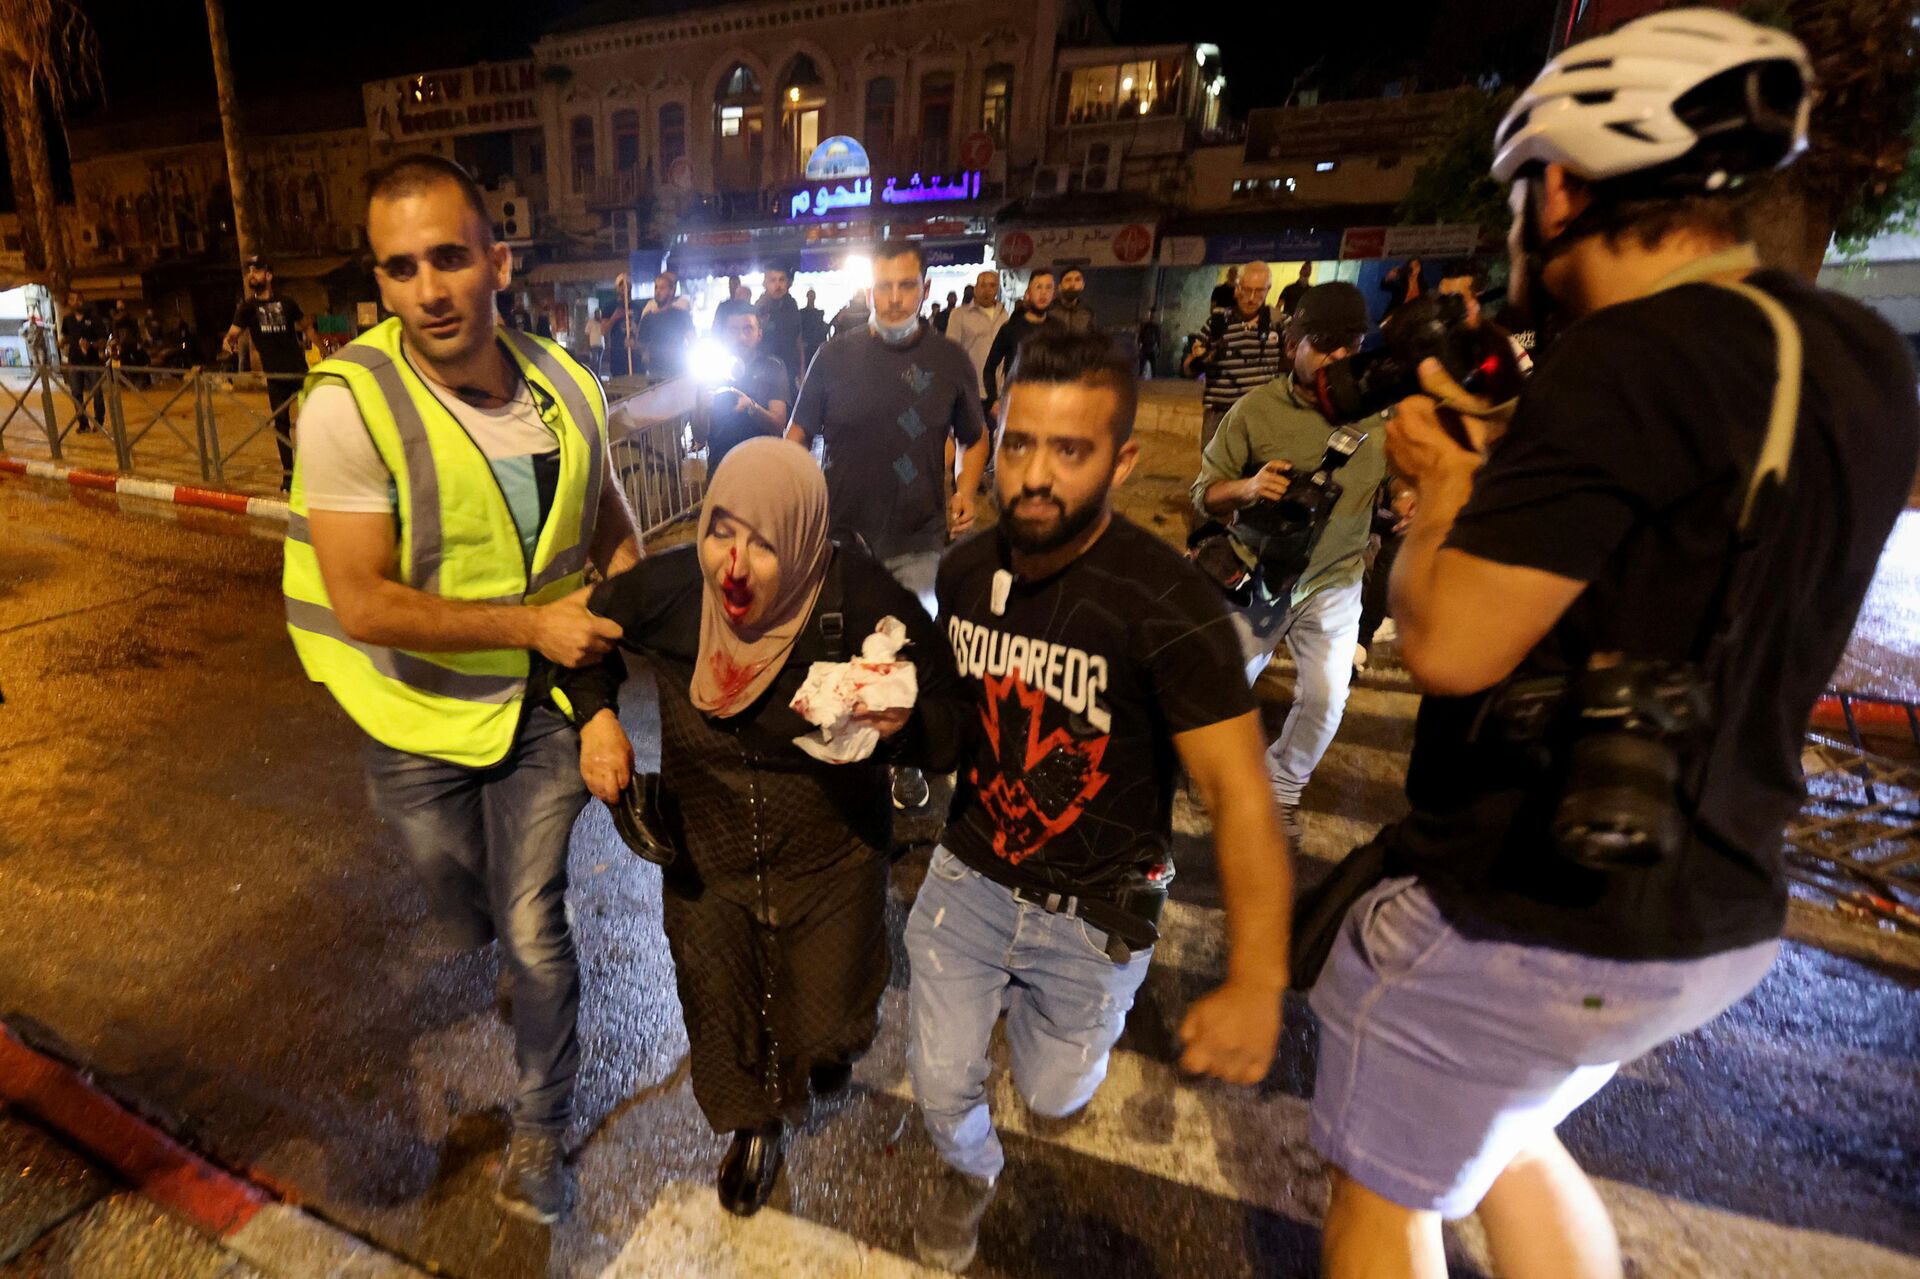 Protesto pró-Palestina na França é reprimido com gás lacrimogêneo pela polícia - Sputnik Brasil, 1920, 15.05.2021